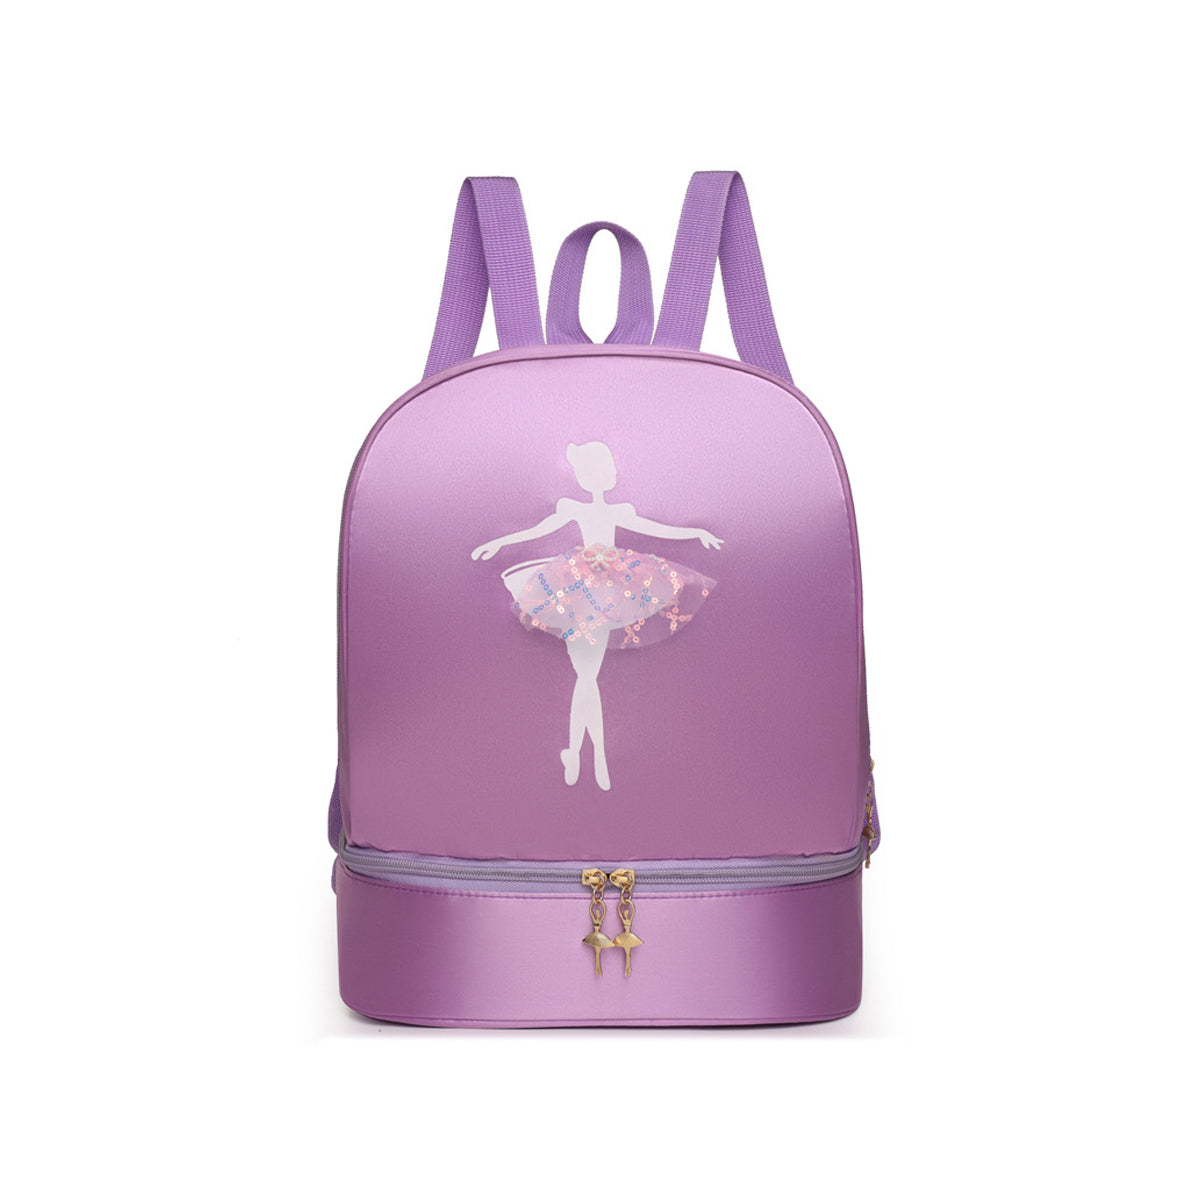 Latin Ballet Schoolbag Girls Princess Dancing Bag